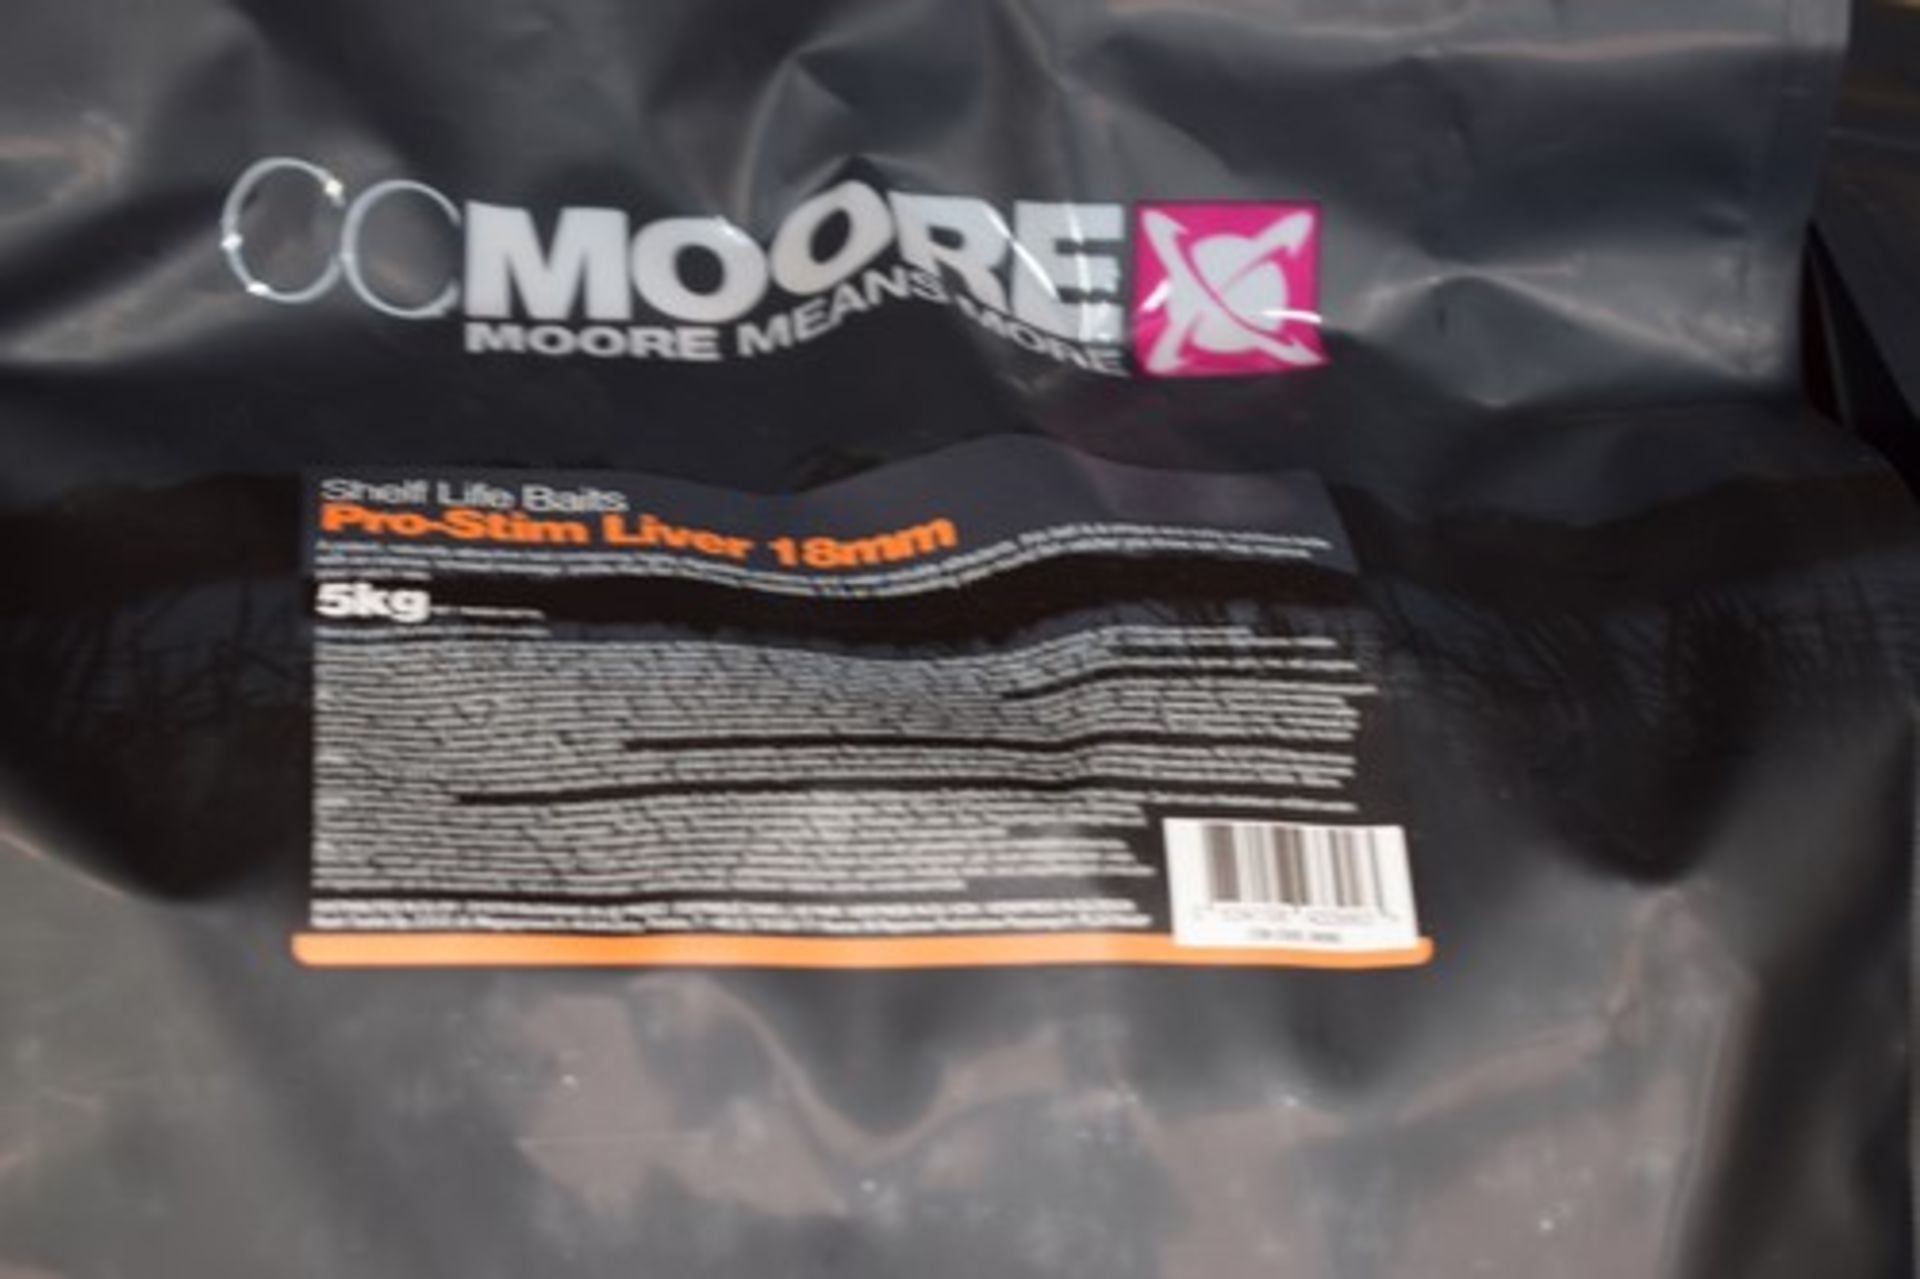 2 x 5kg bags of CC Moore pro-stim liver 18mm fish food, 1 x tub of 50 x CC Moore pro-stim liver 15mm - Image 3 of 3